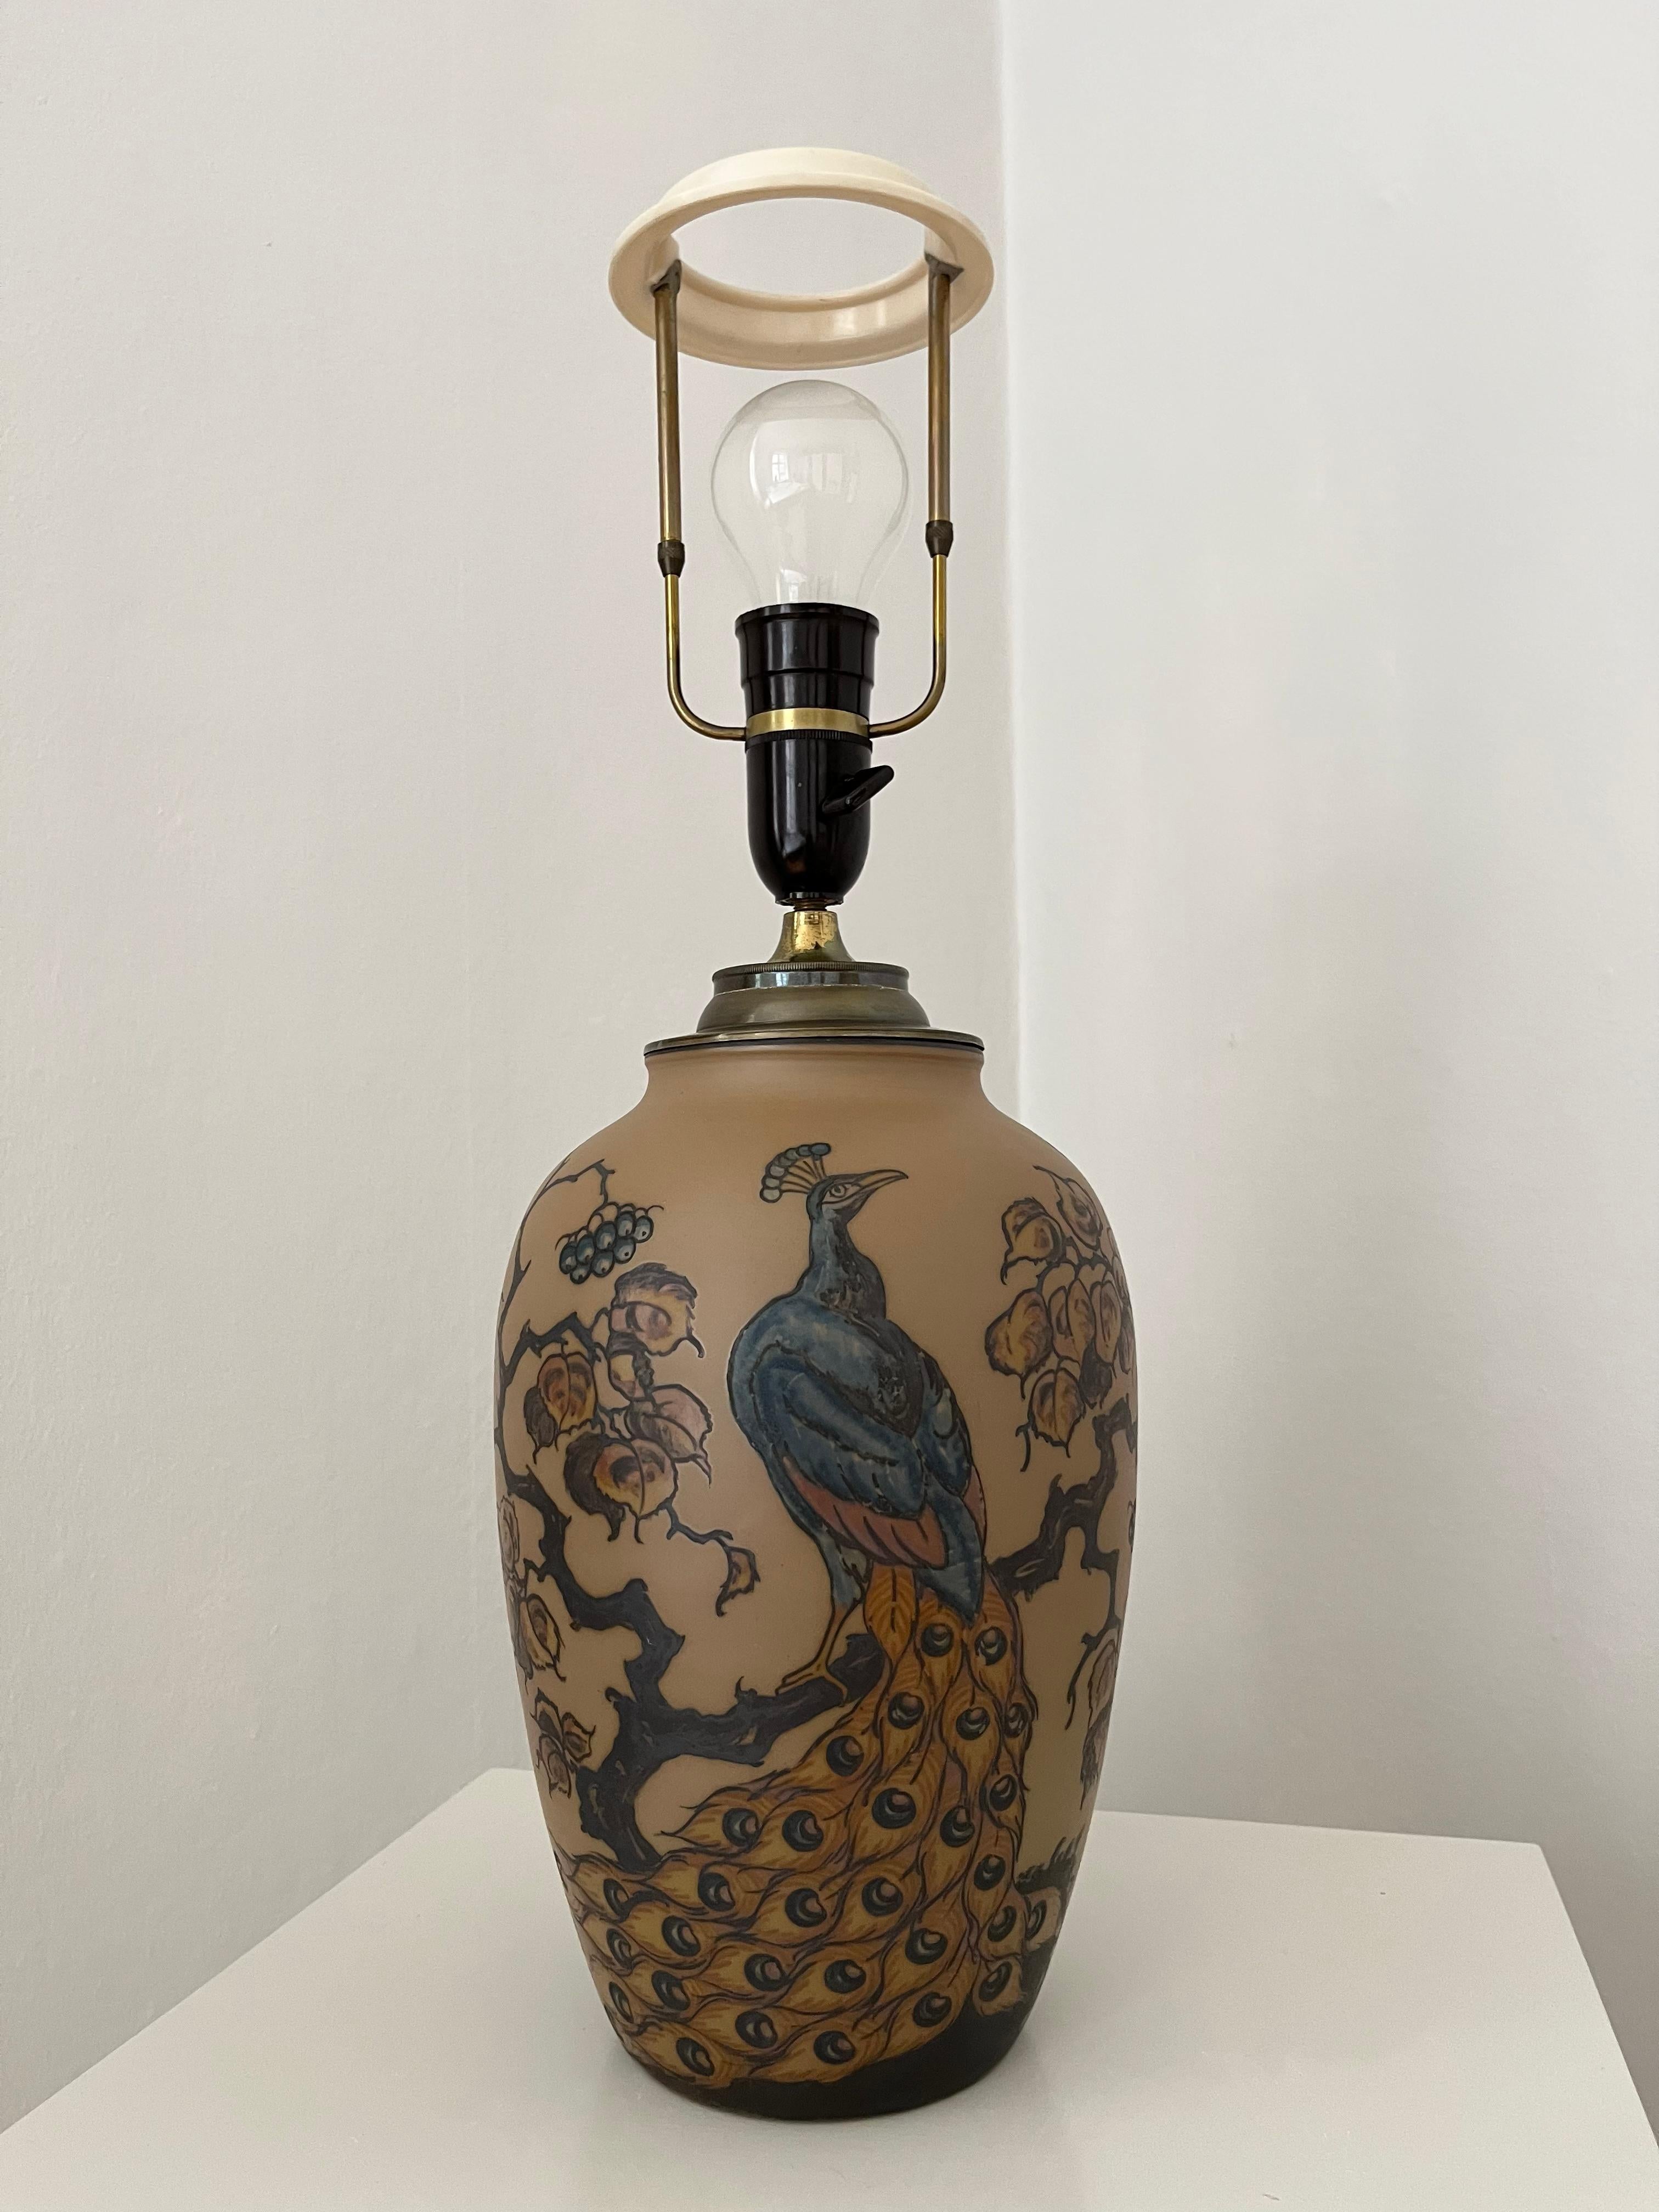 Art Nouveau 1930s Danish art nouveau ceramic table lamp decorated with peacock by L. Hjort